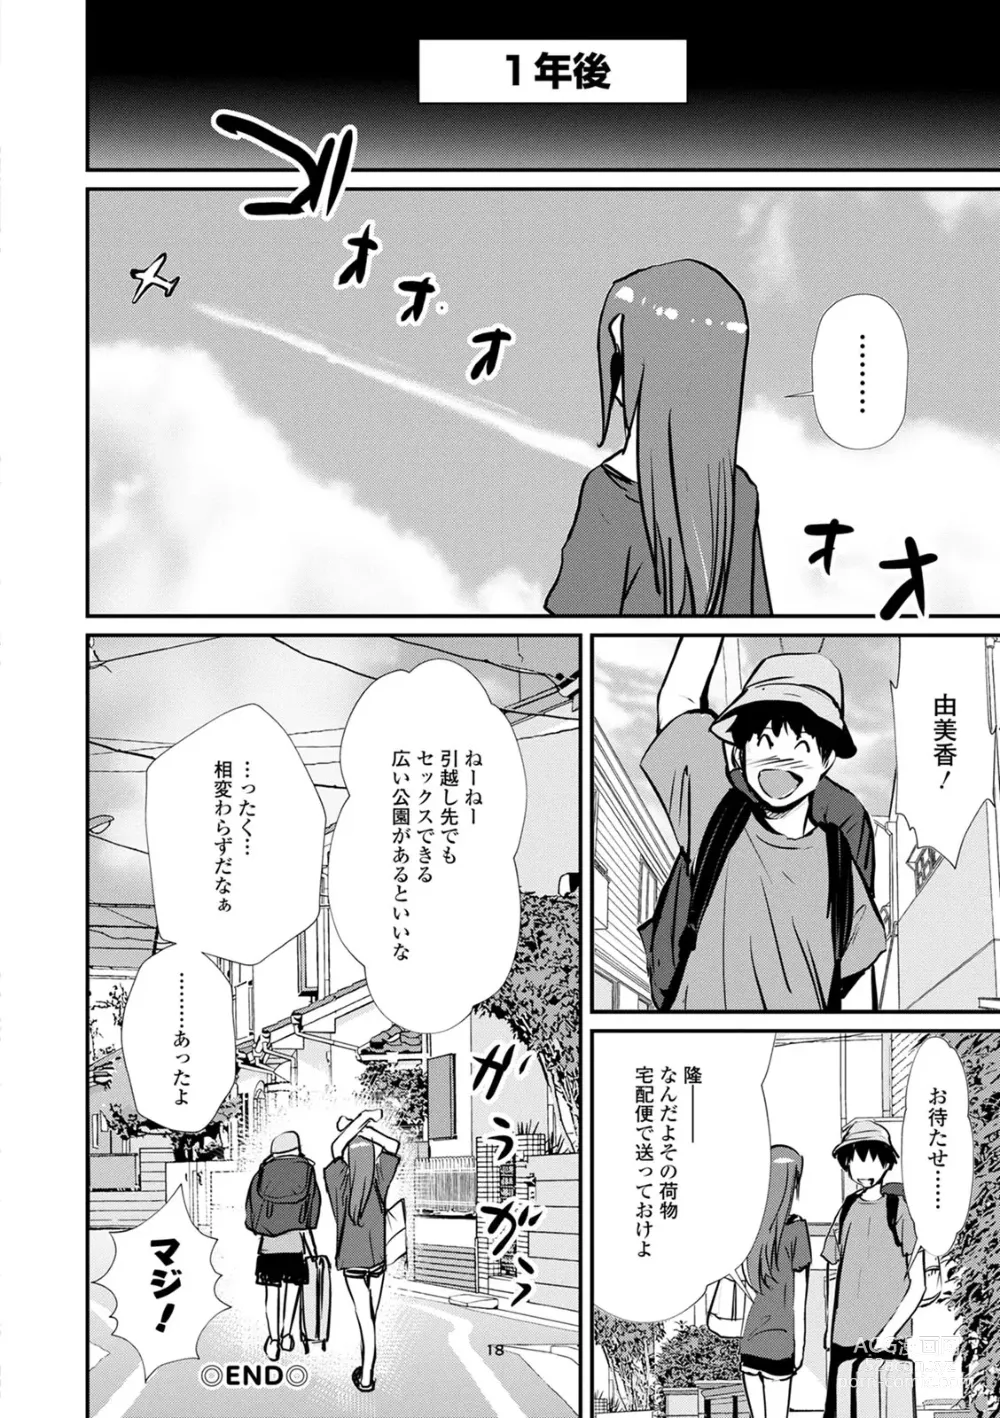 Page 166 of manga Hadaka Asobi